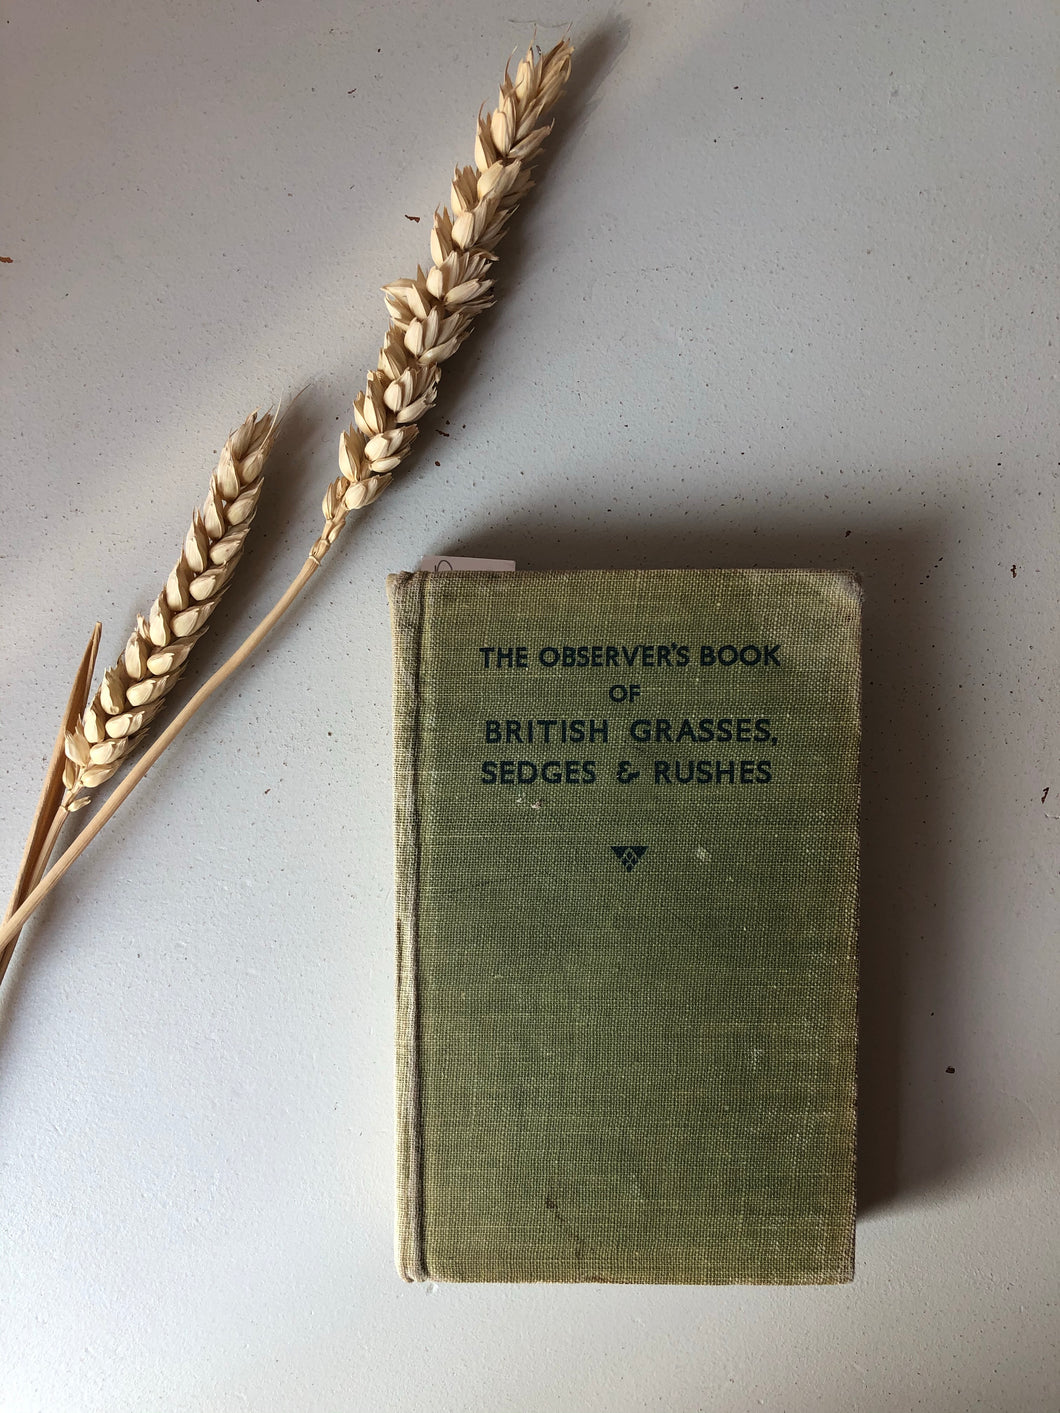 Observer Book of Grasses, Sedges, & Rushes